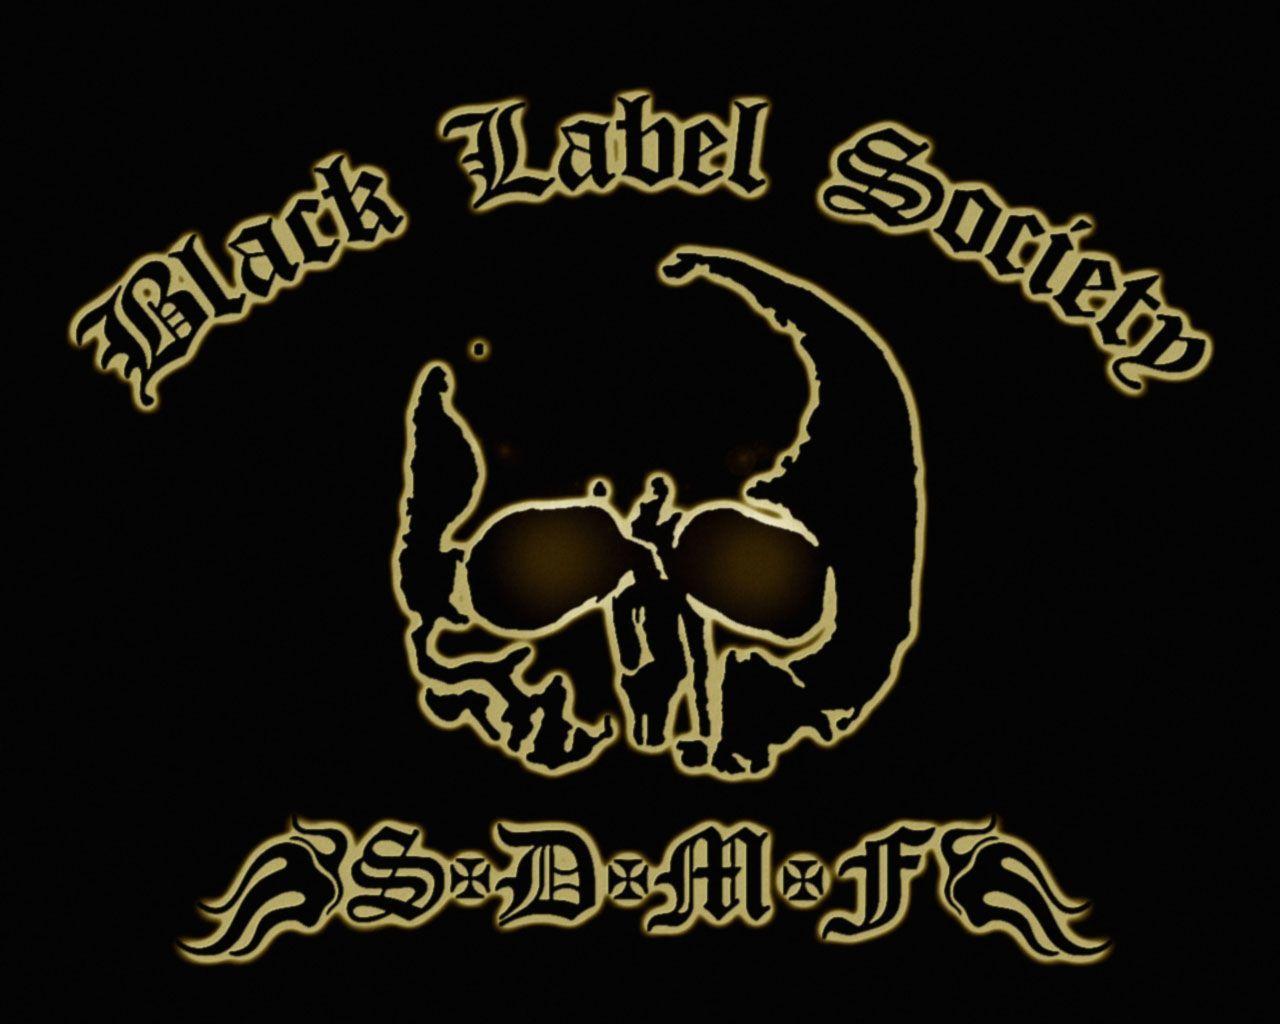 Black Label Society Wallpaper -B1 Band Wallpaper